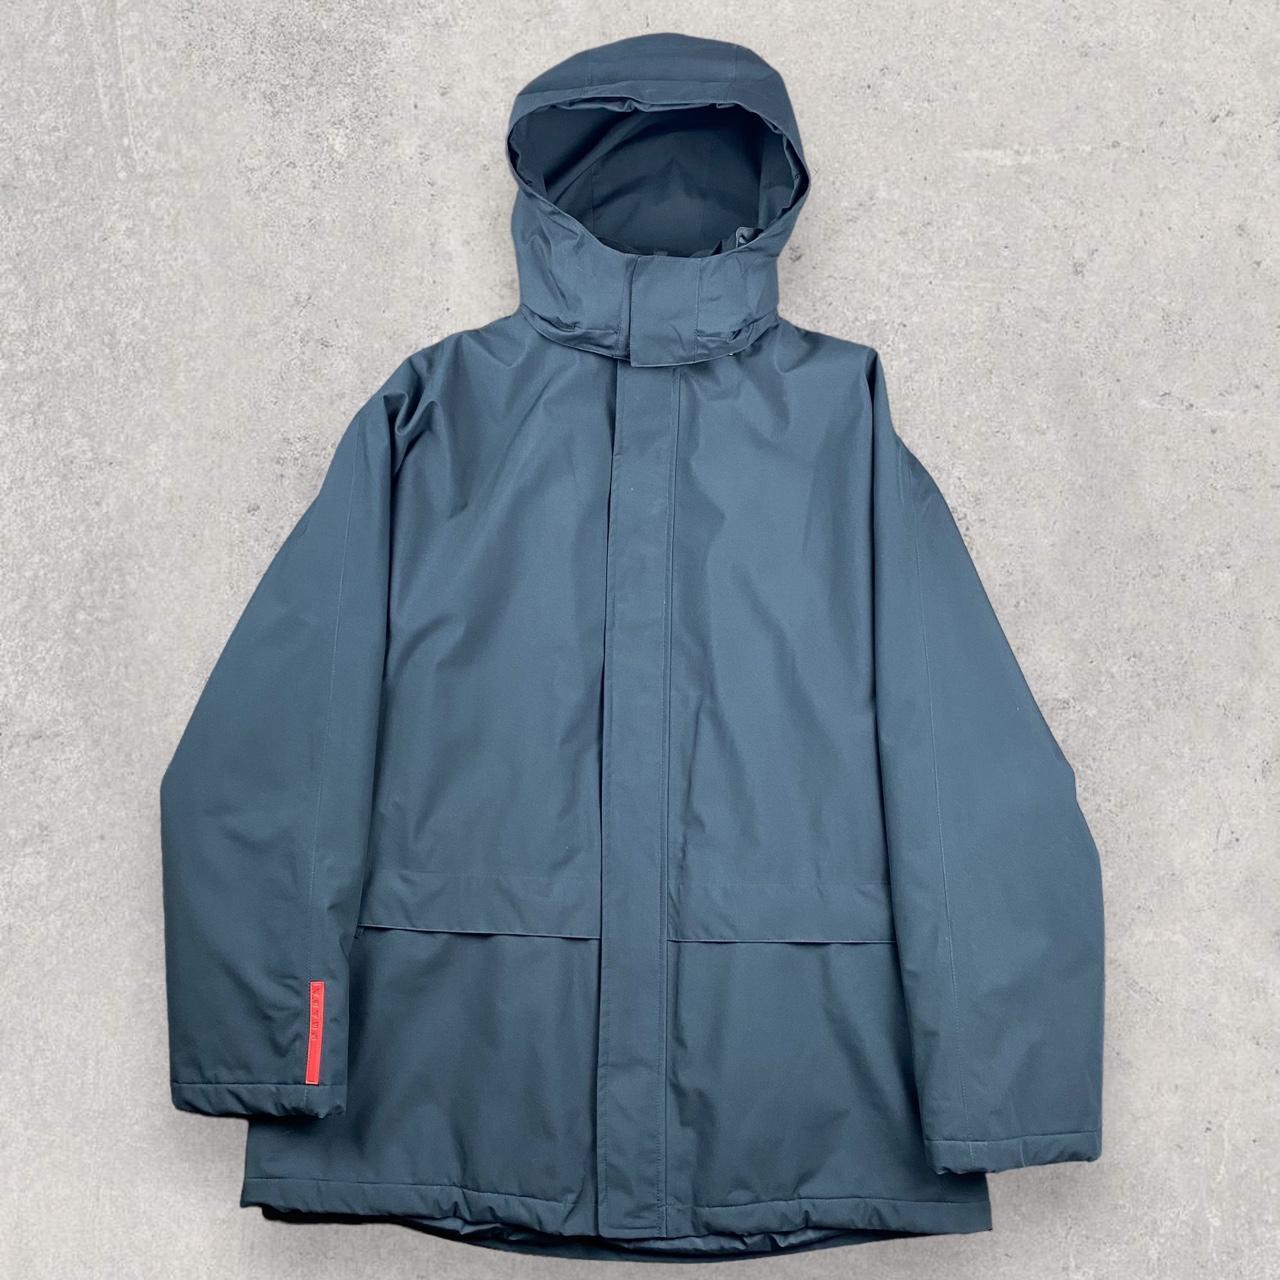 Prada 2001 insulated Gore-Tex jacket coat with... - Depop